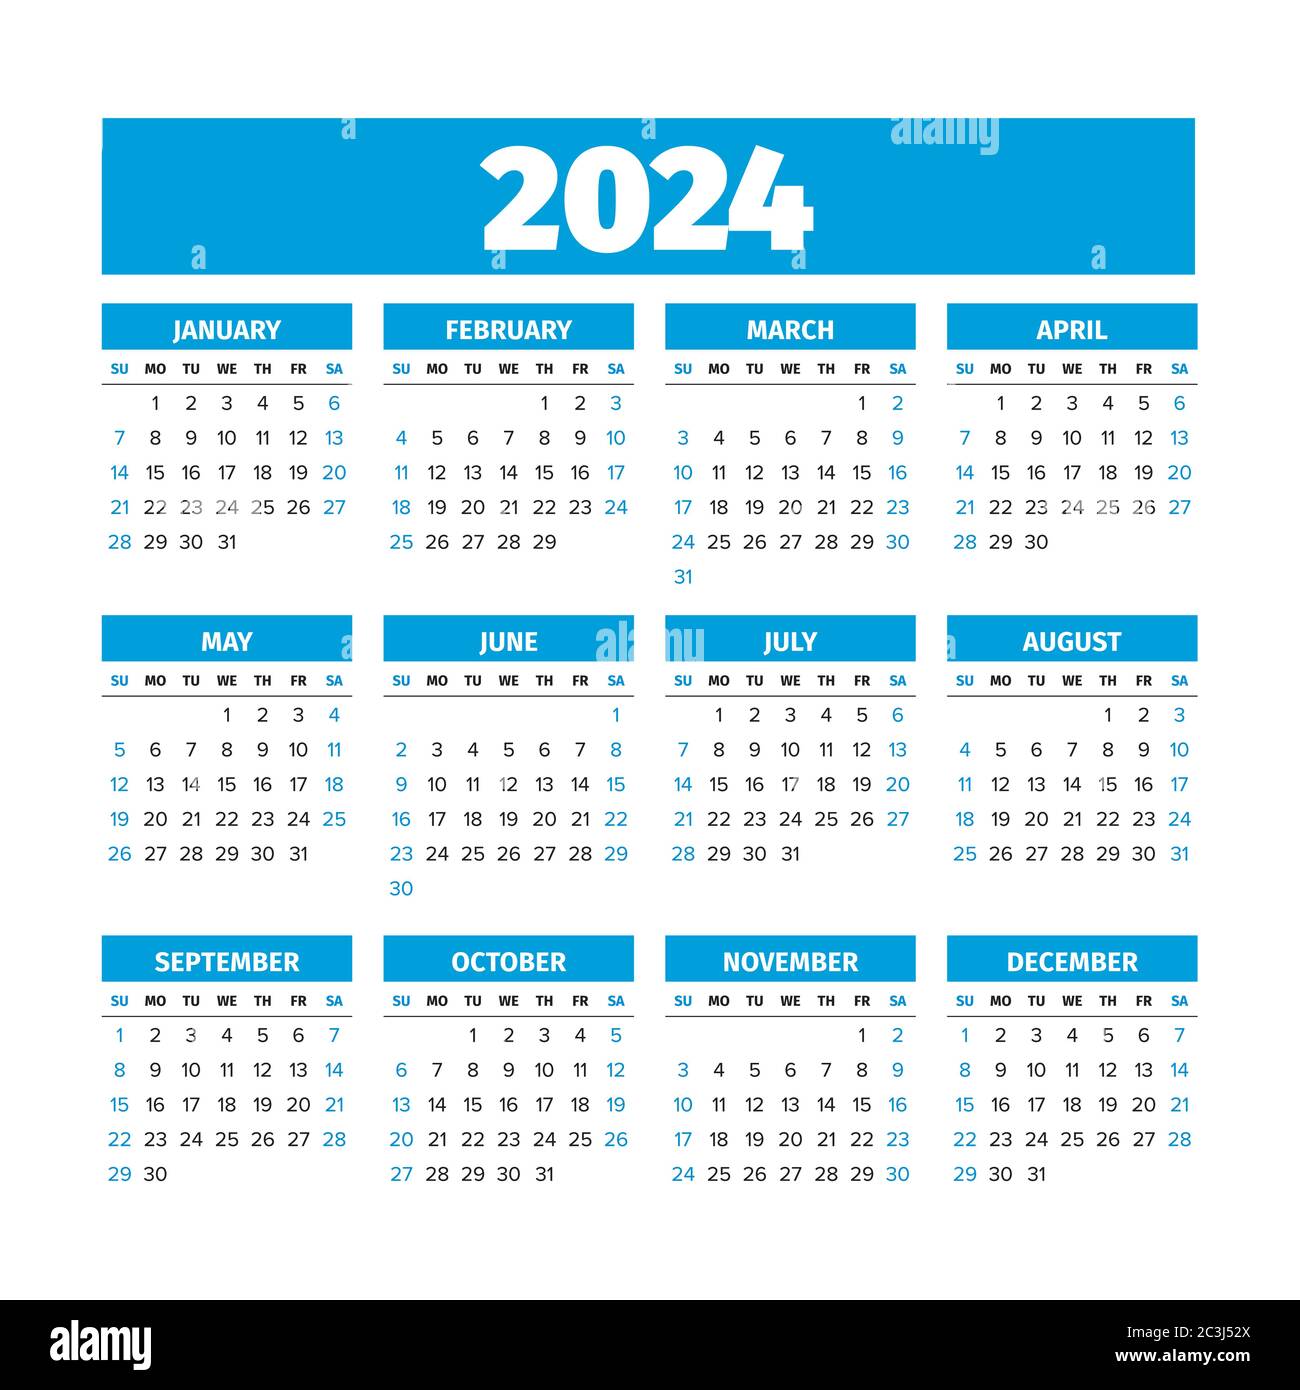 Semana Santa 2024 Calendar Calendar 2024